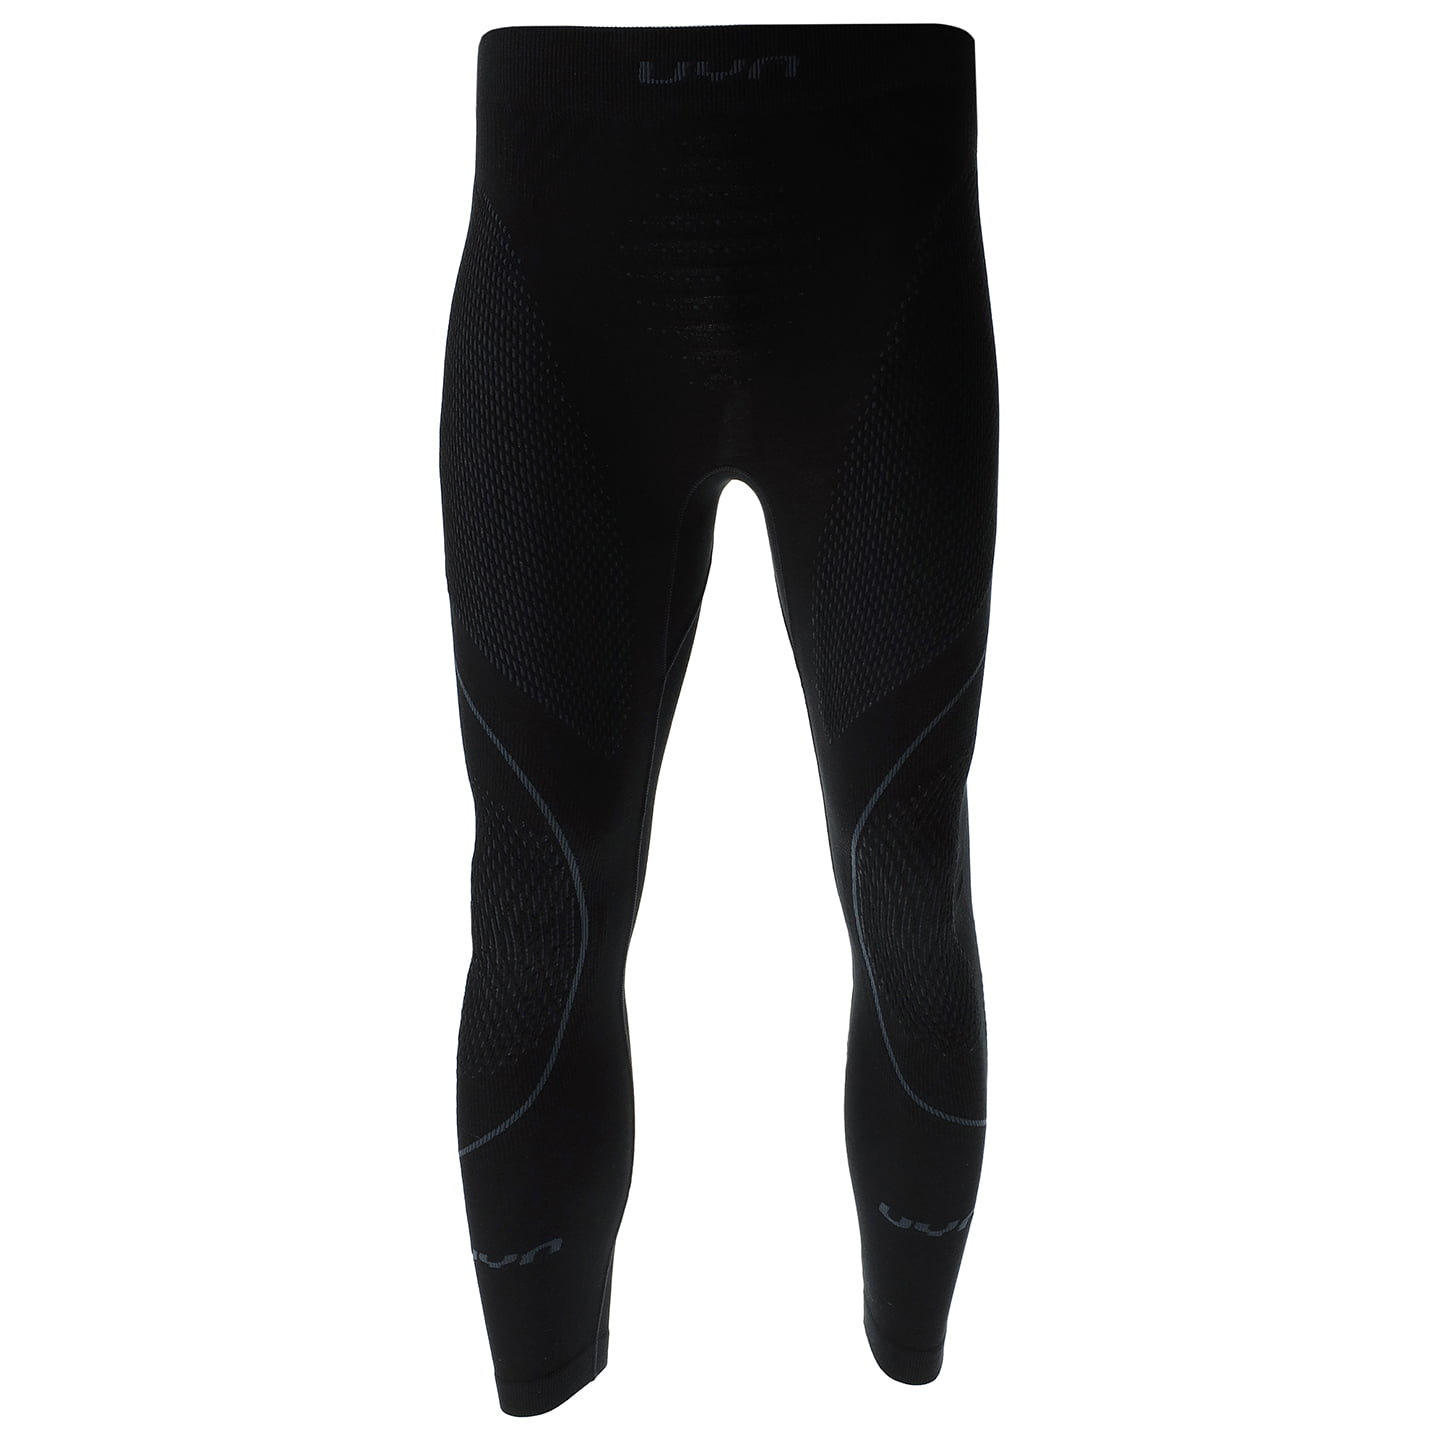 UYN long cycling pants without pad Evolutyon Biotech, for men, size 2XL, Briefs, Cycle gear